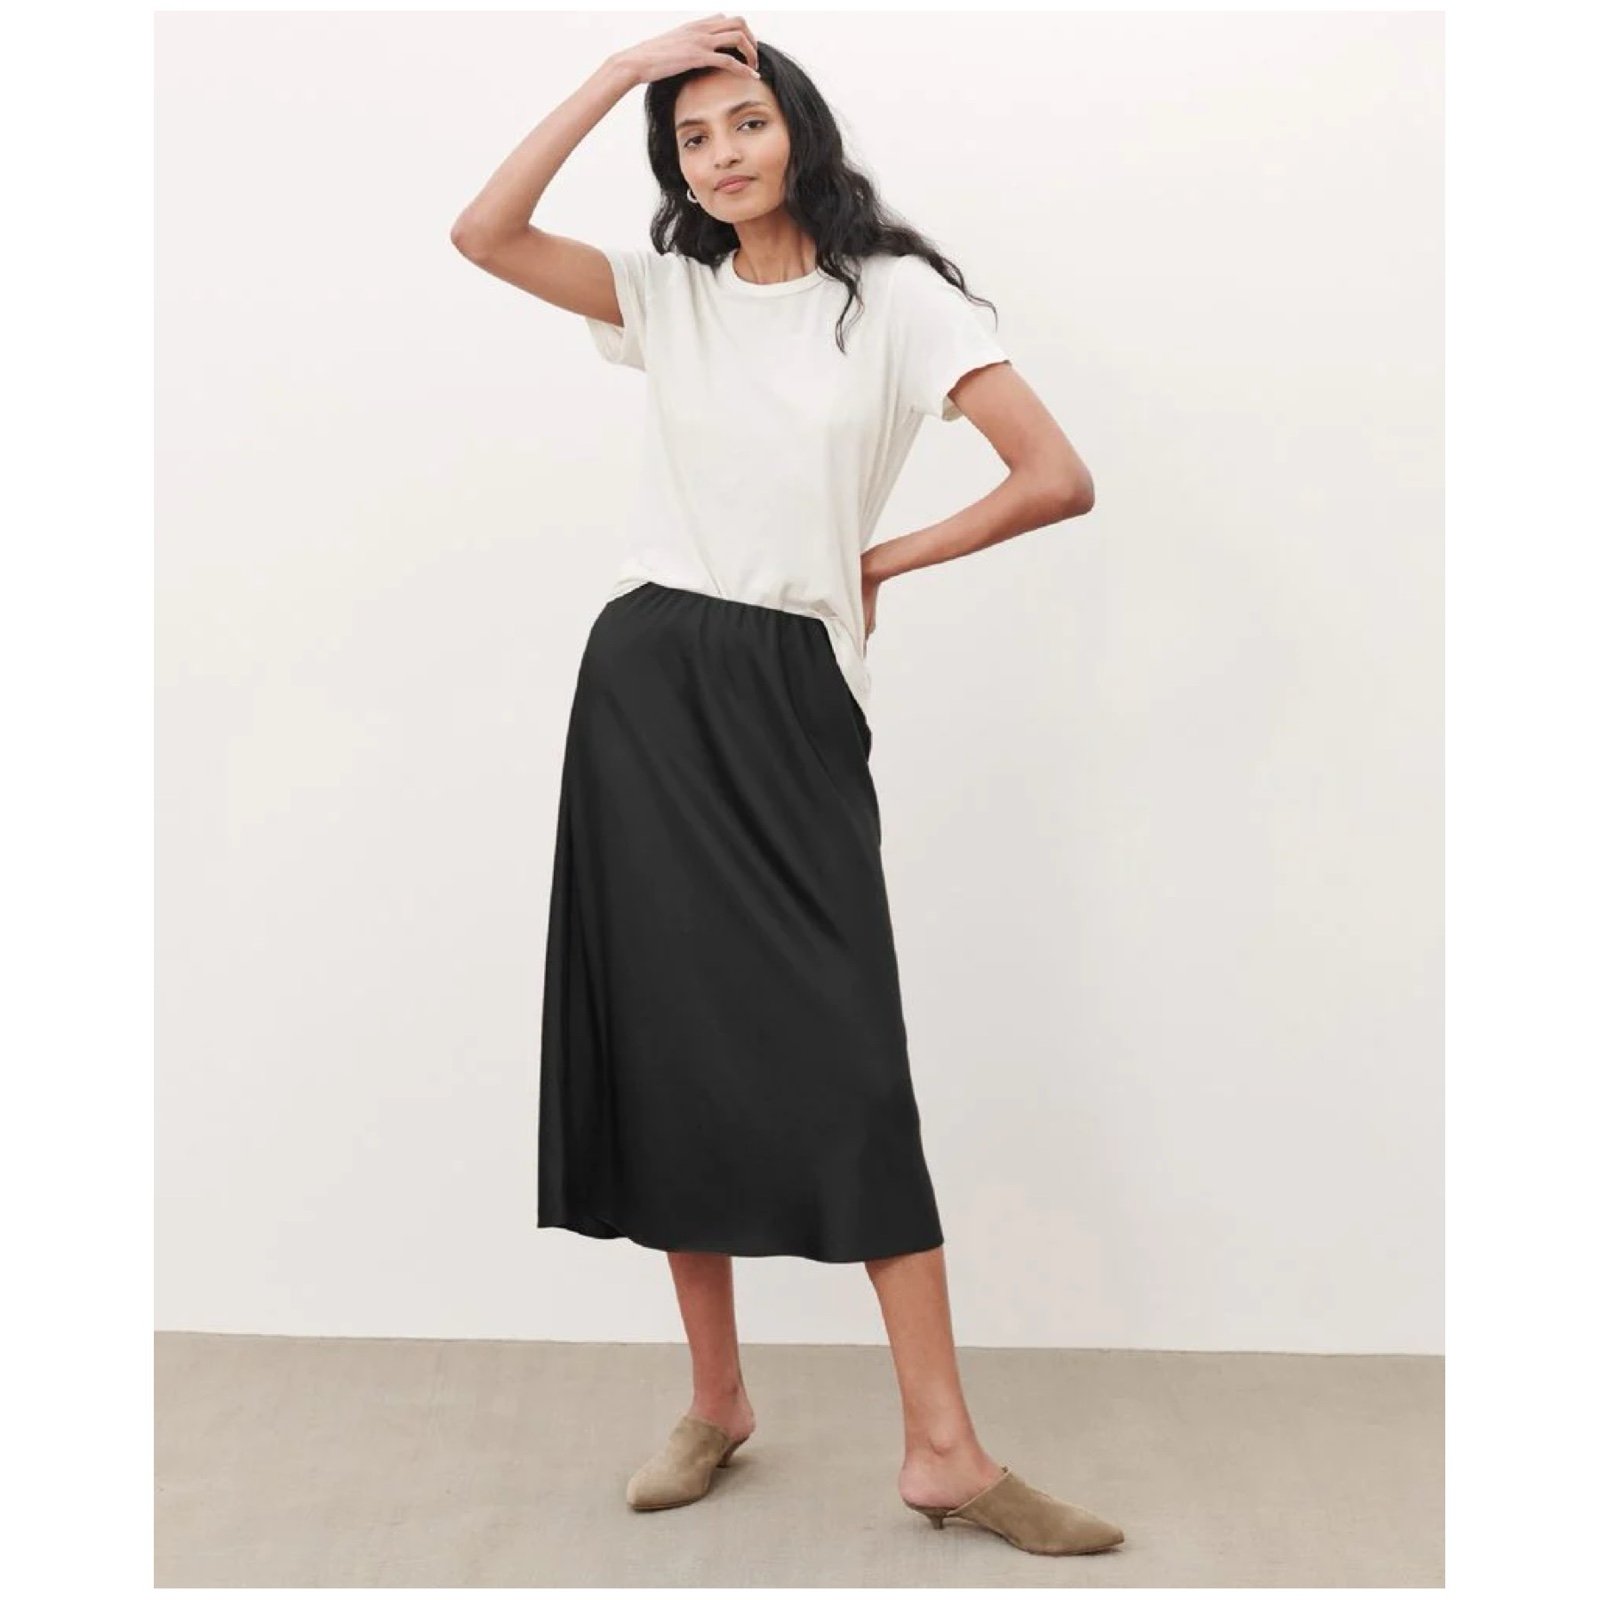 High quality JENNI KAYNE Slip Skirt, Black, Large FRETW